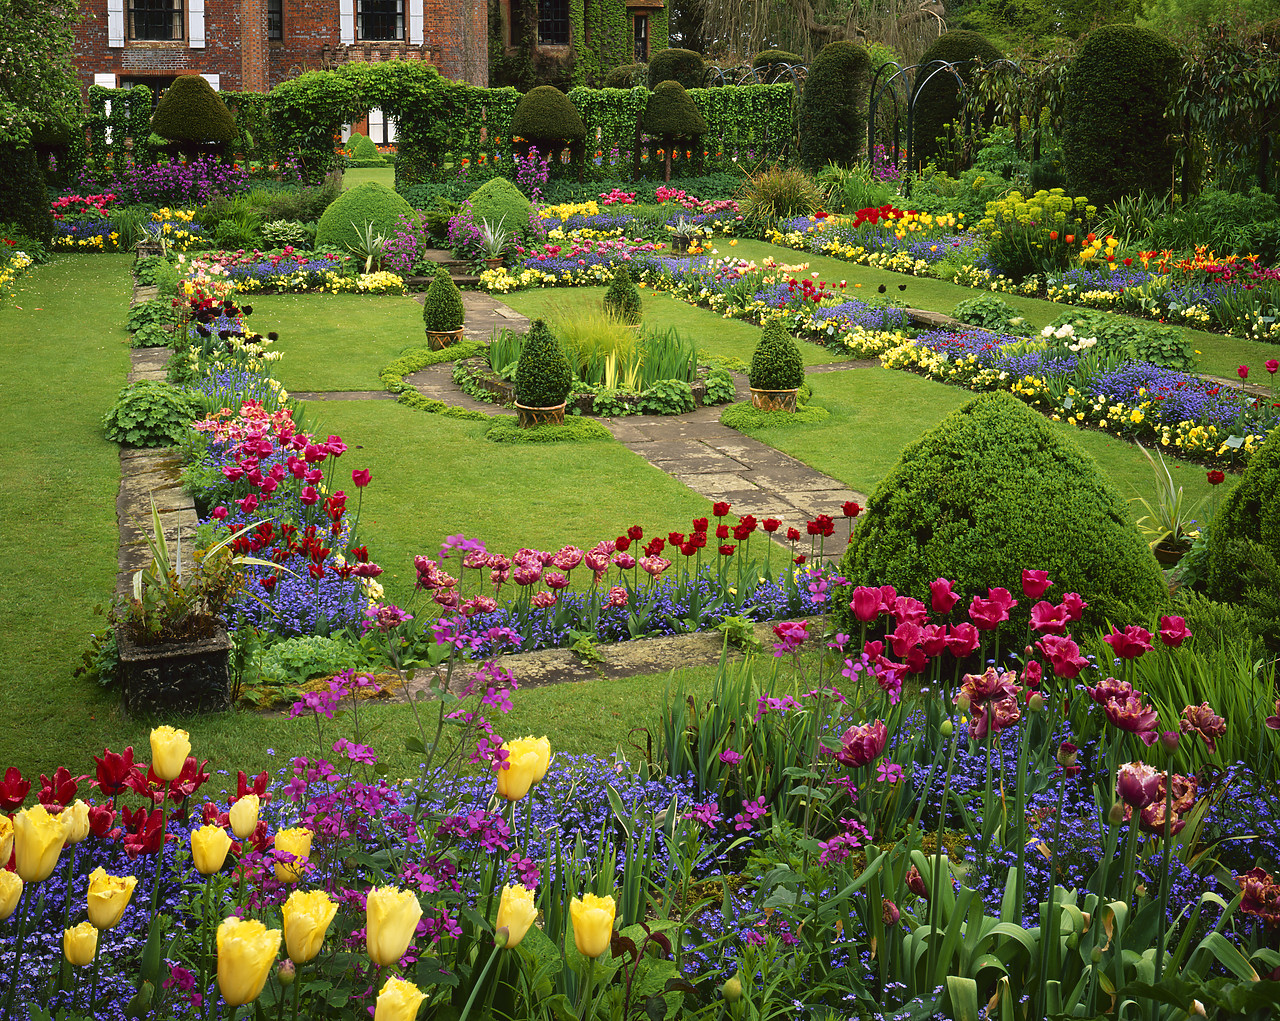 #050209-2 - Chenies Manor Garden in Spring, Chenies, Buckinghamshire, England